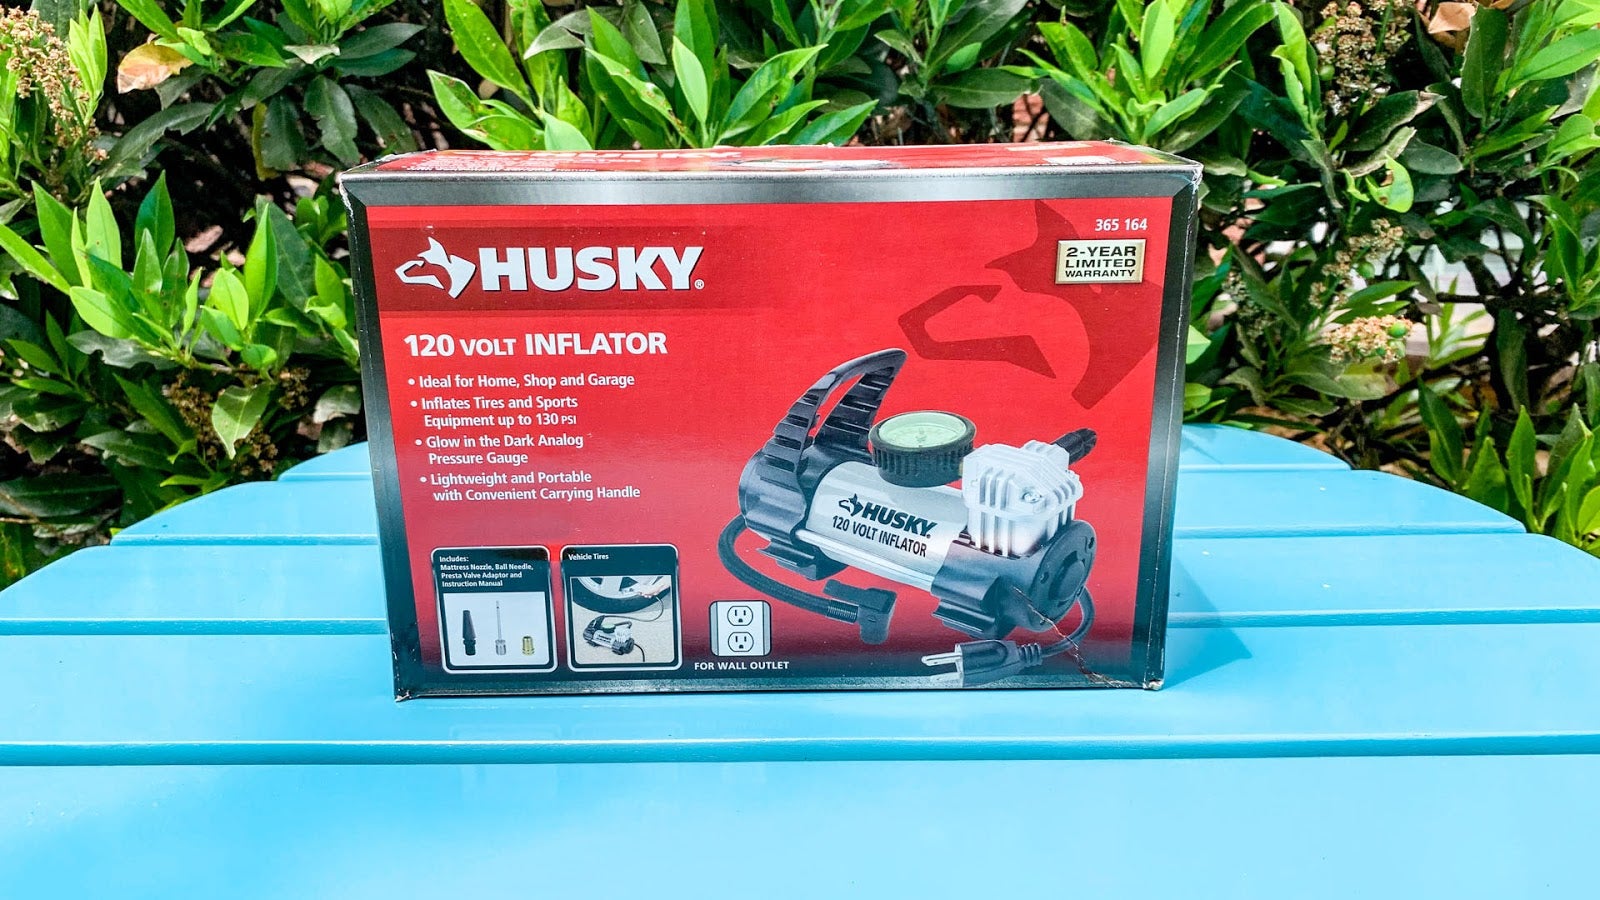 Light Weight 365164 Husky Inflator 120-Volt 130 PSI Portable Air Compressor 